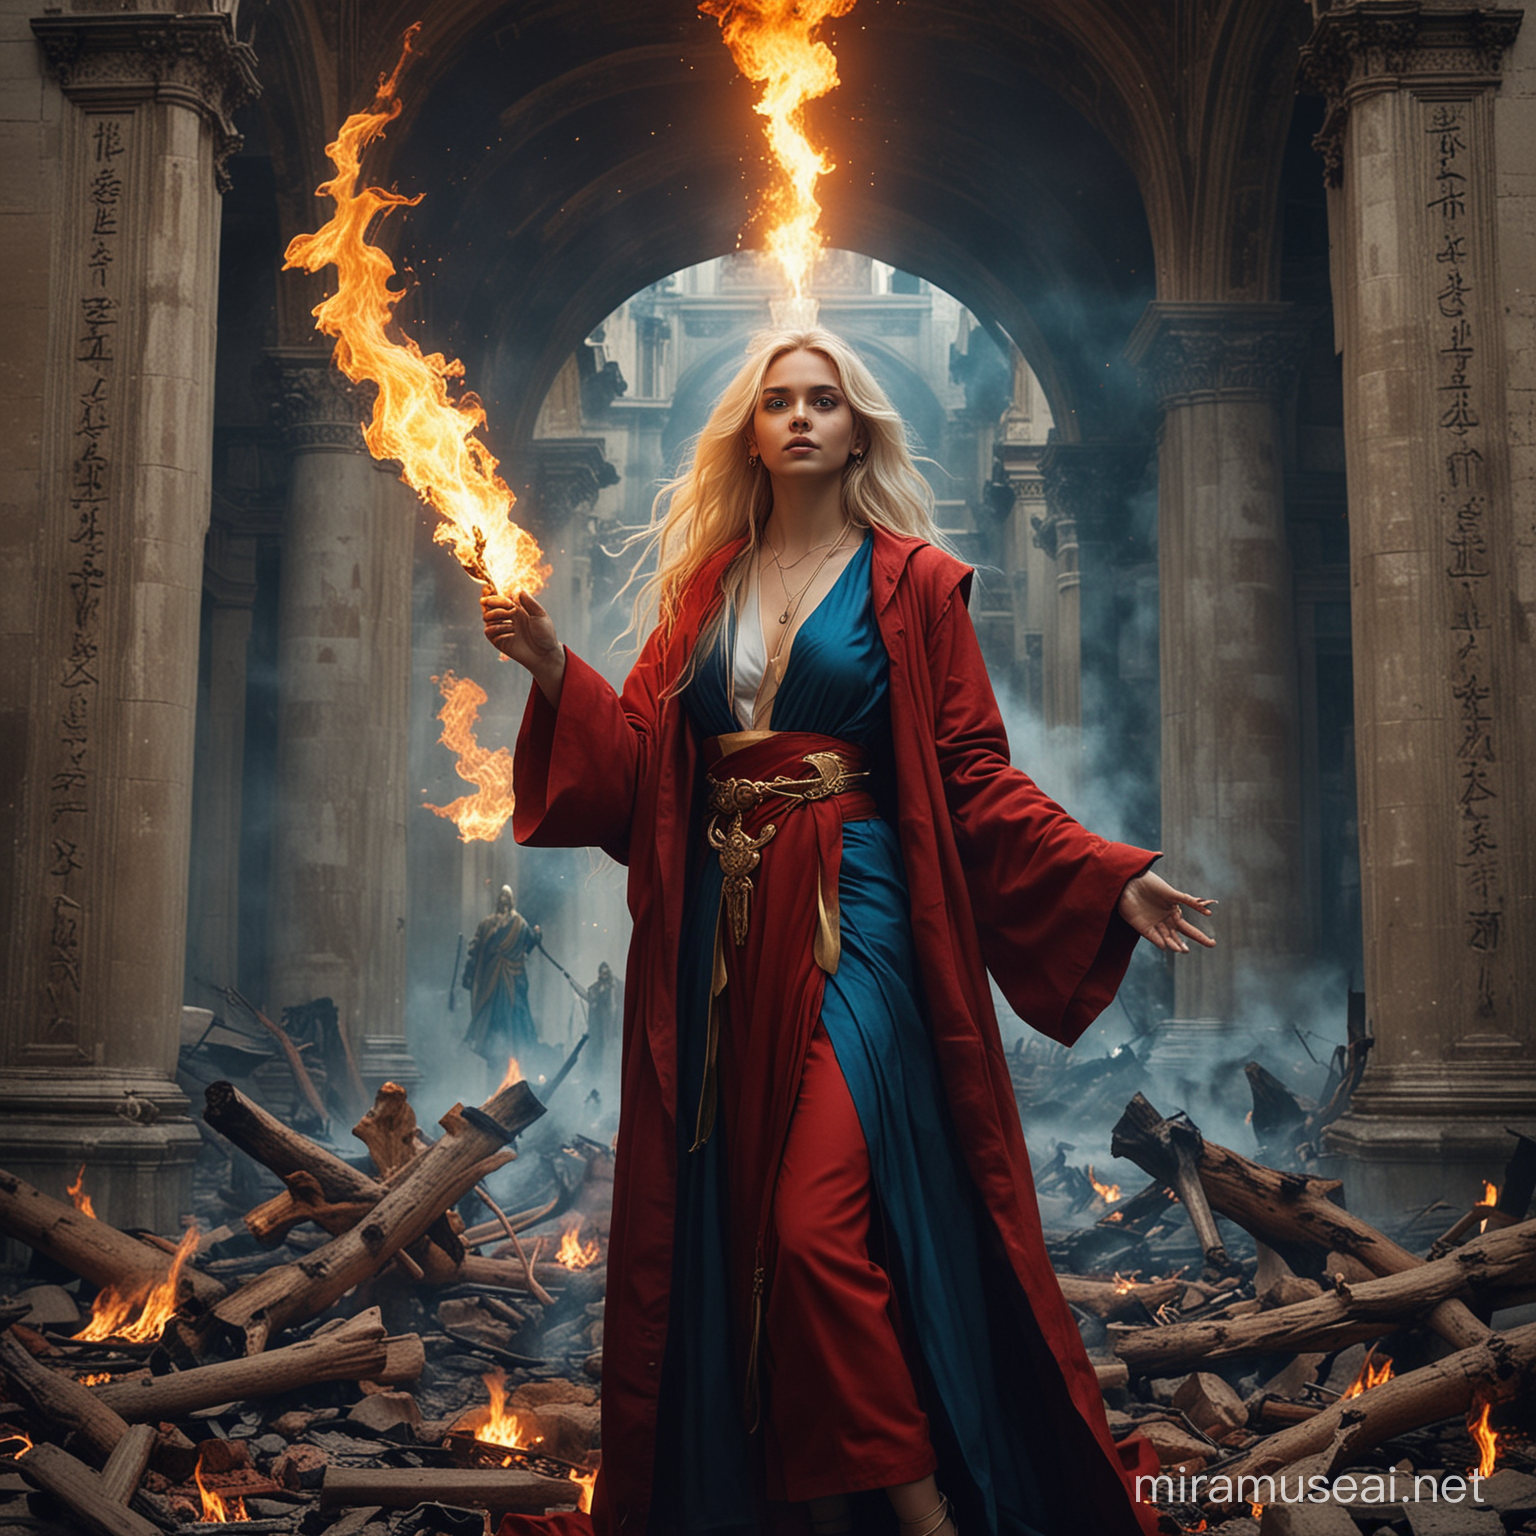 Powerful Hindu Empress Goddess Conjuring Fire and Lightning amidst Demonic Entities